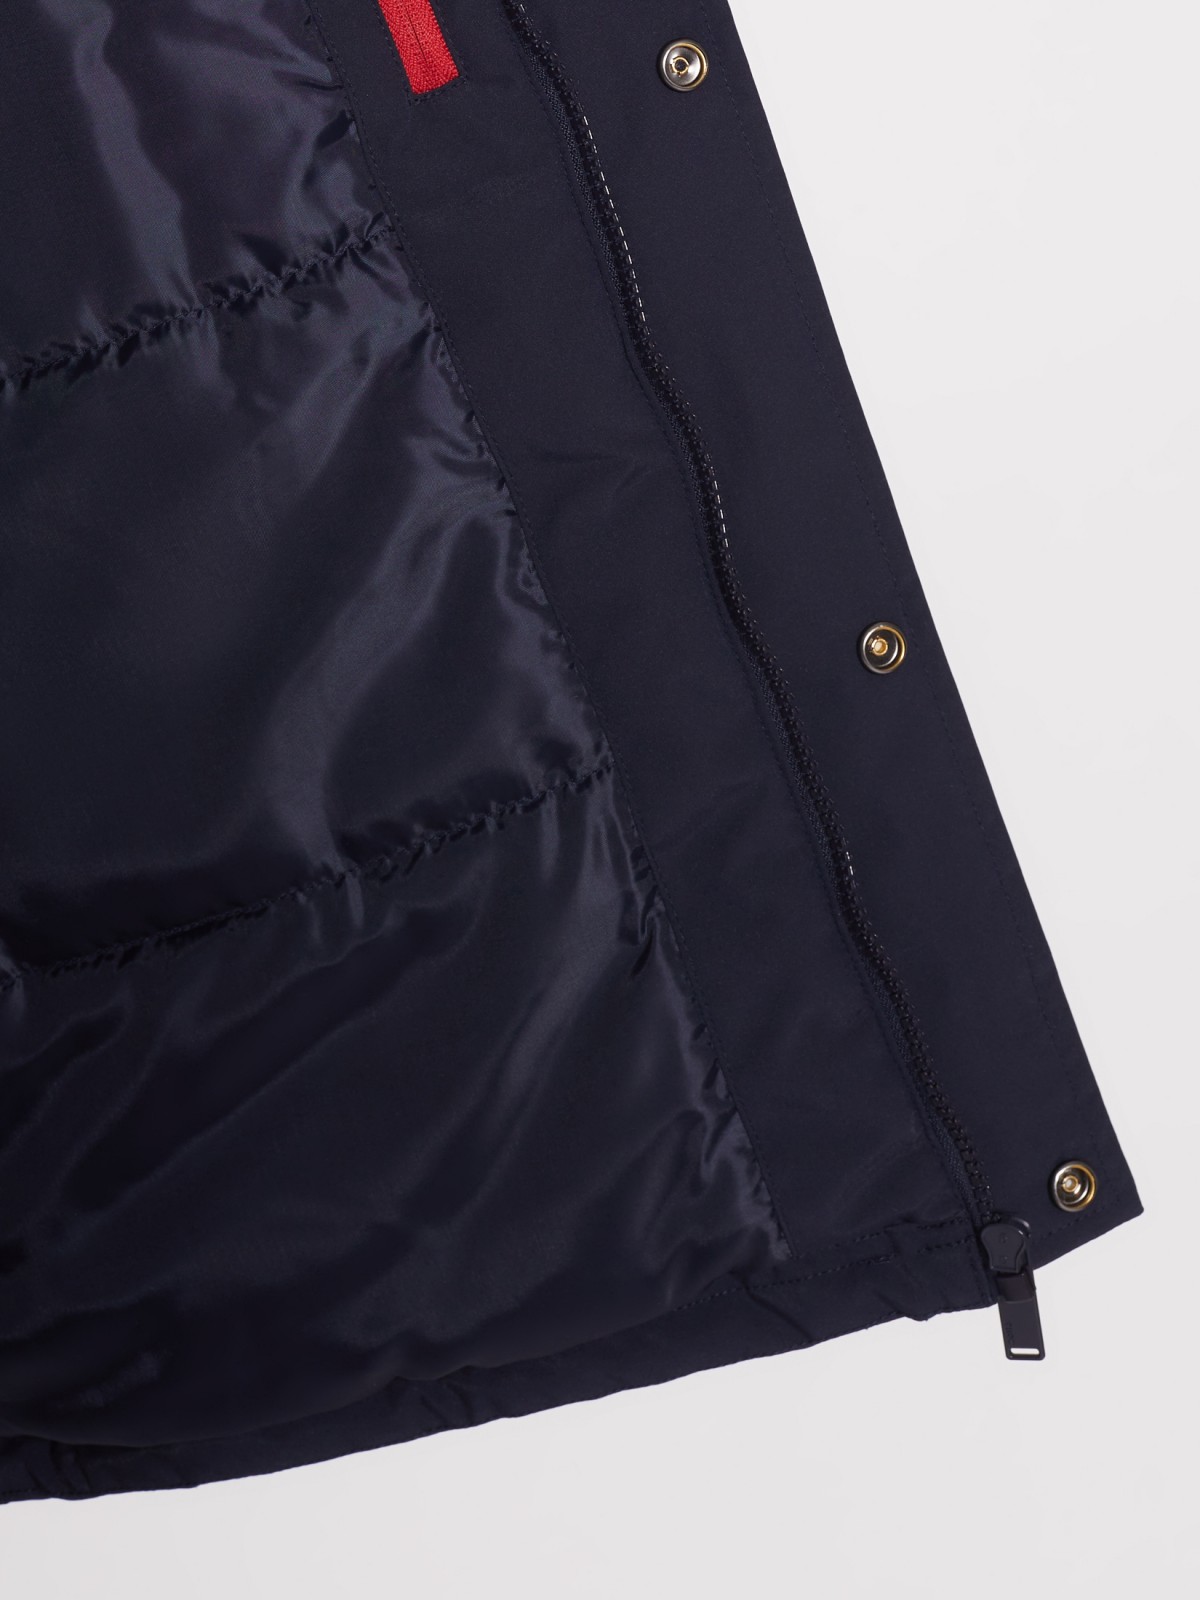 Утеплённая куртка с капюшоном zolla 012135102104, цвет темно-синий, размер M - фото 3